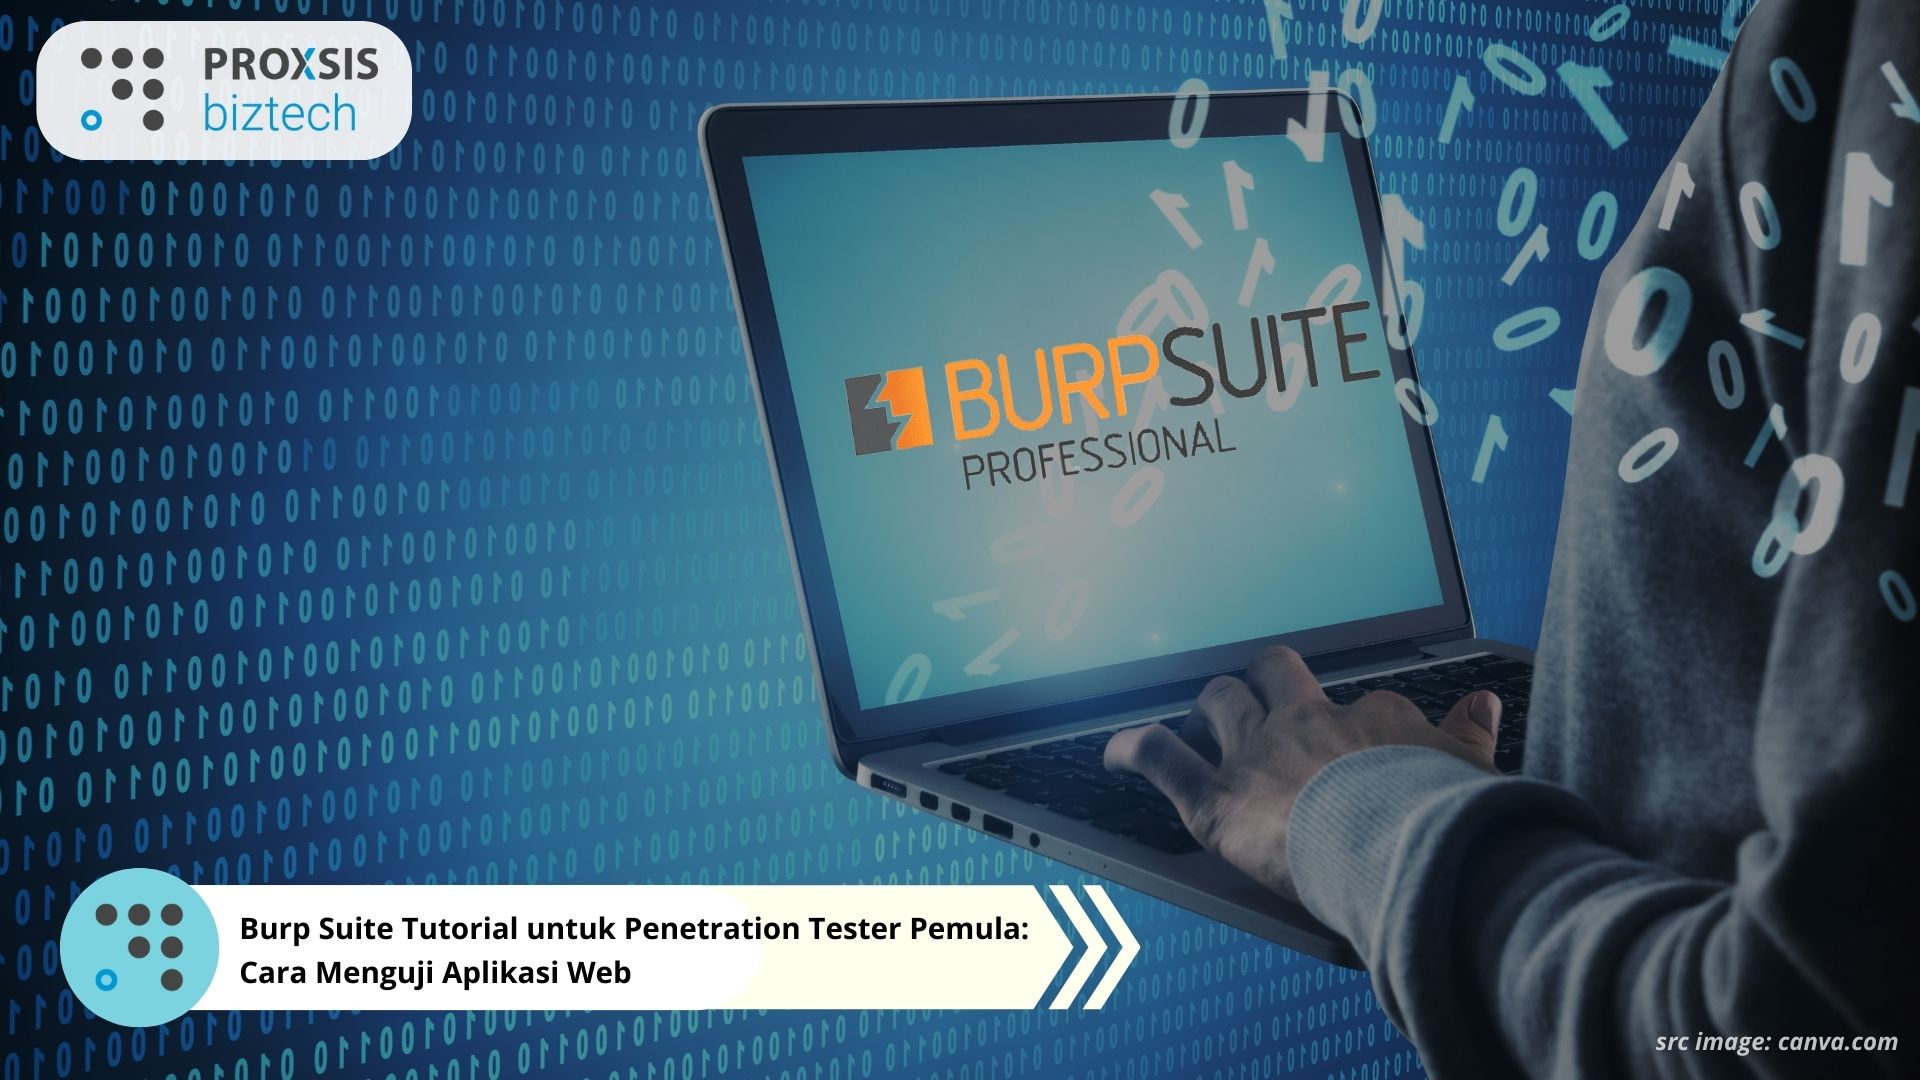 Burp Suite Tutorial untuk Penetration Tester Pemula: Cara Menguji Aplikasi Web